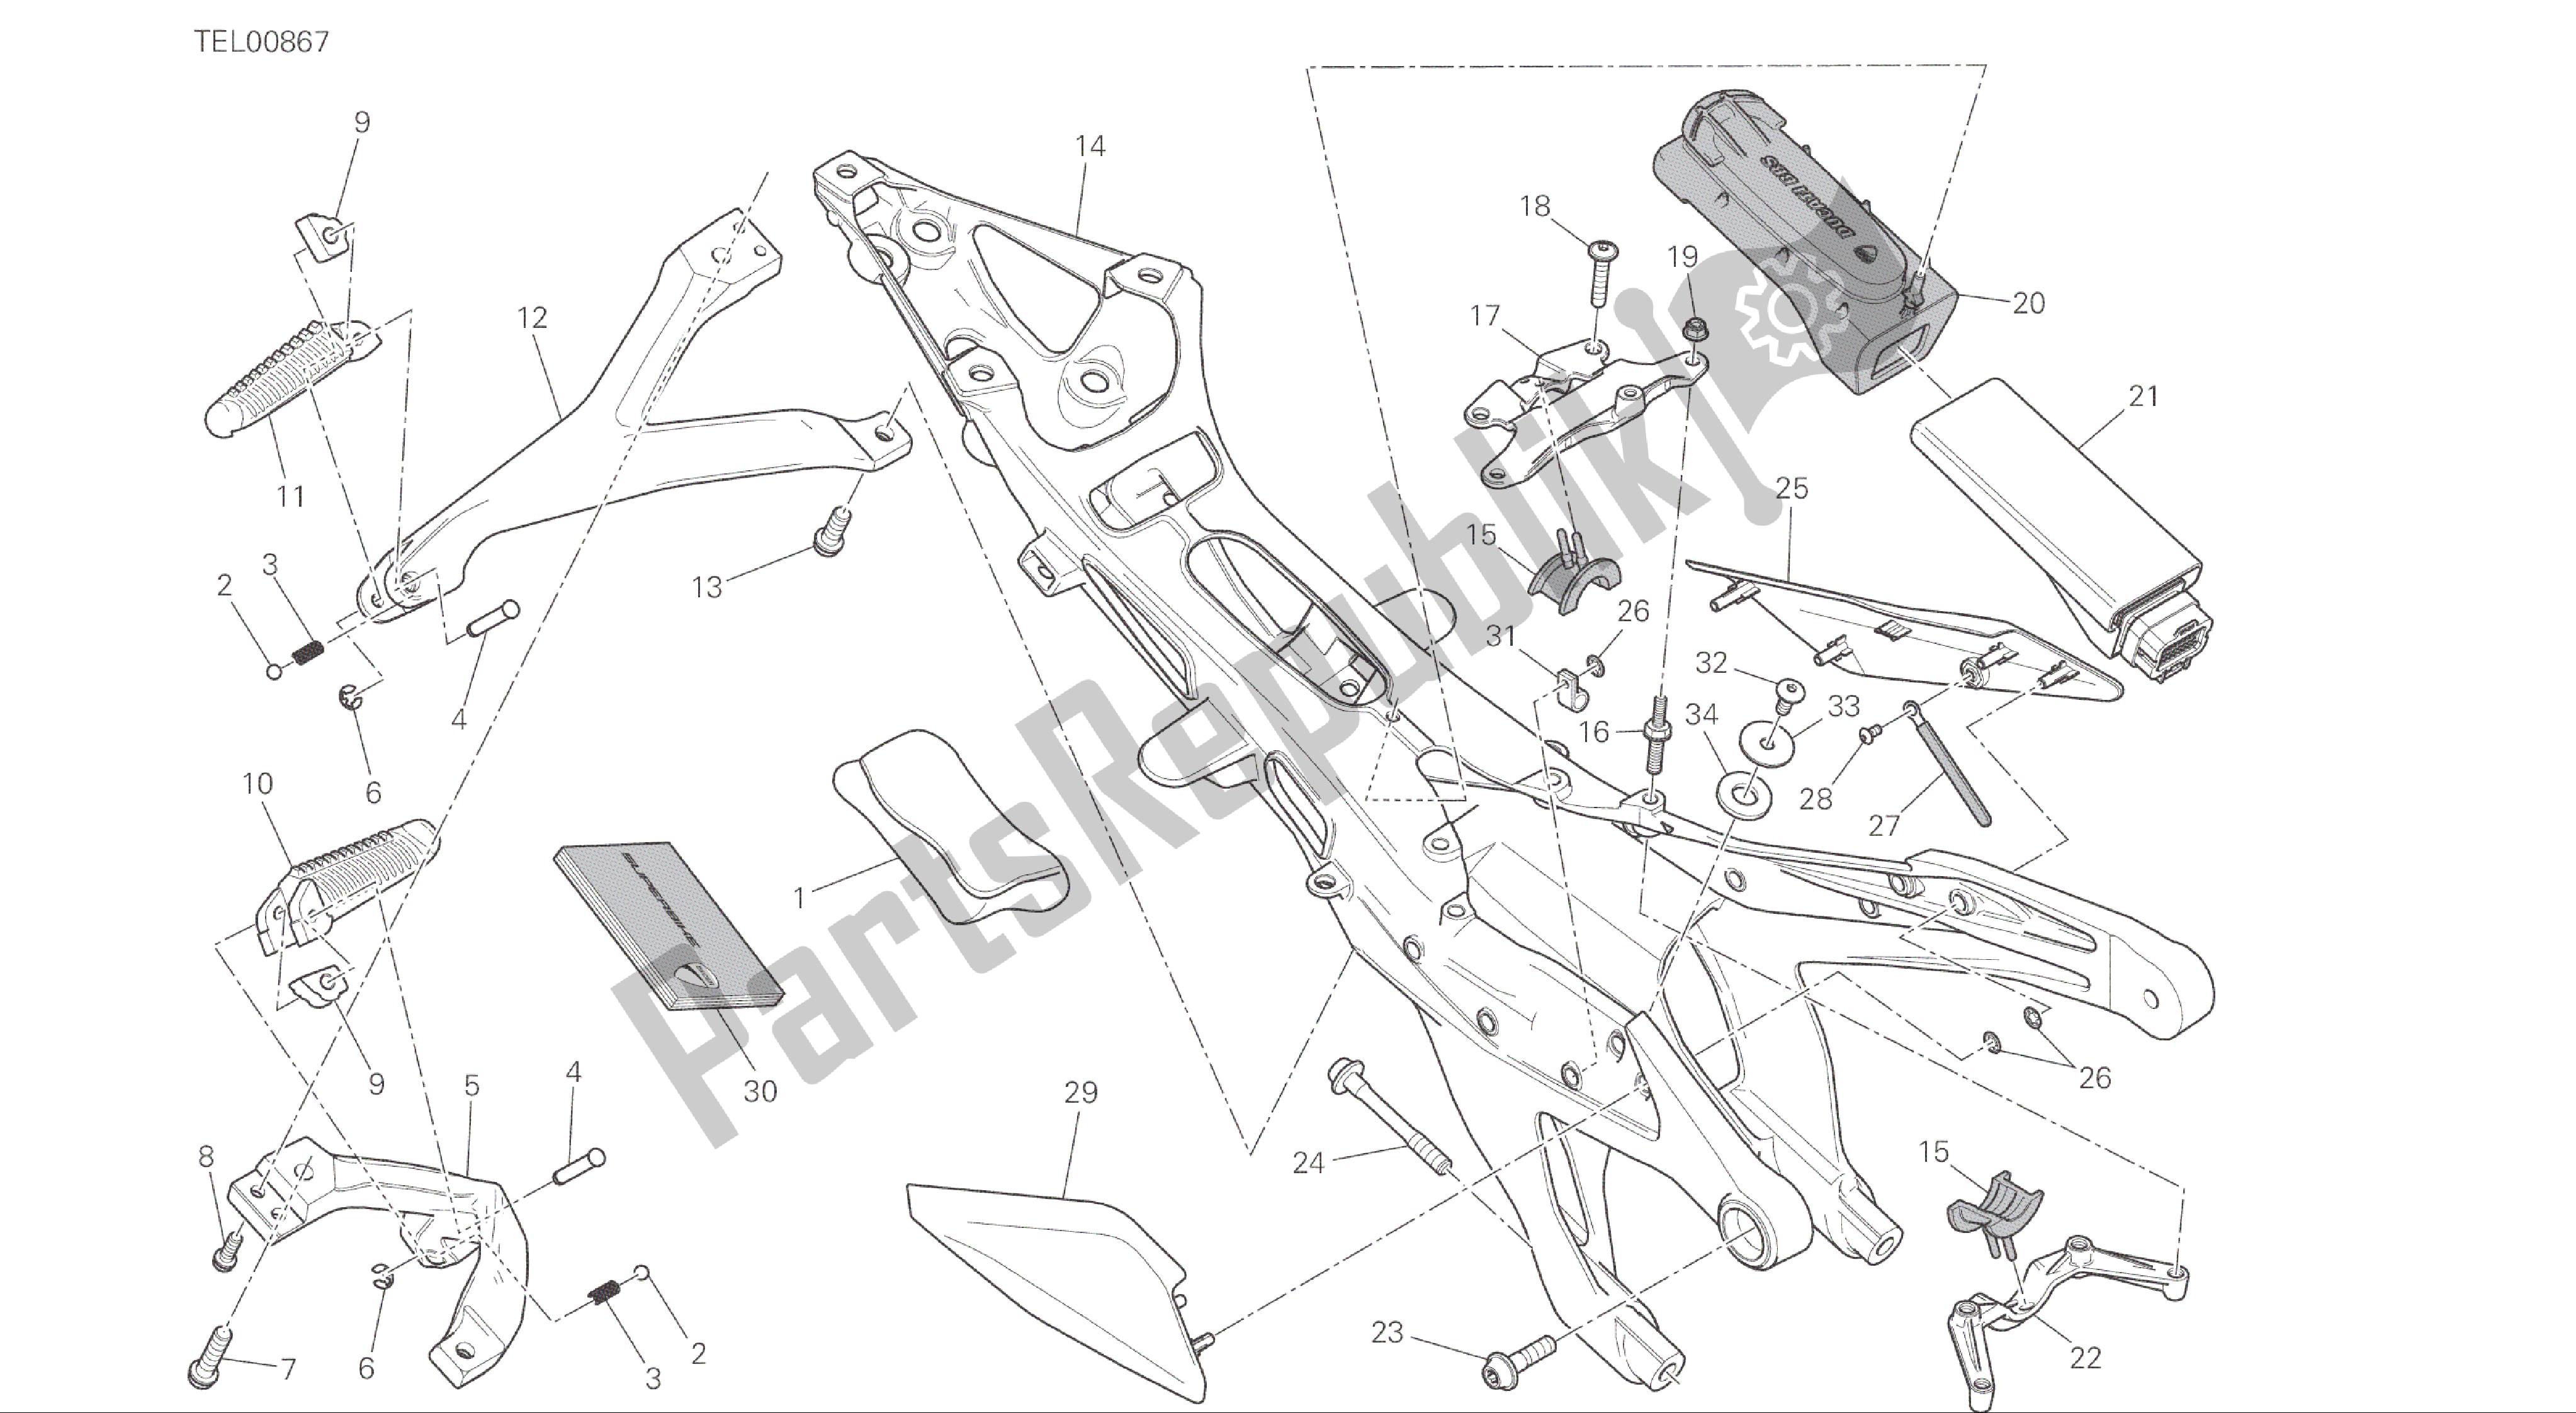 Alle onderdelen voor de Tekening 027 - Achterframe Comp. [mod: 1299; Xst: Aus, Eur, Fra, Jap, Twn] Groepsframe van de Ducati Panigale ABS 1299 2016